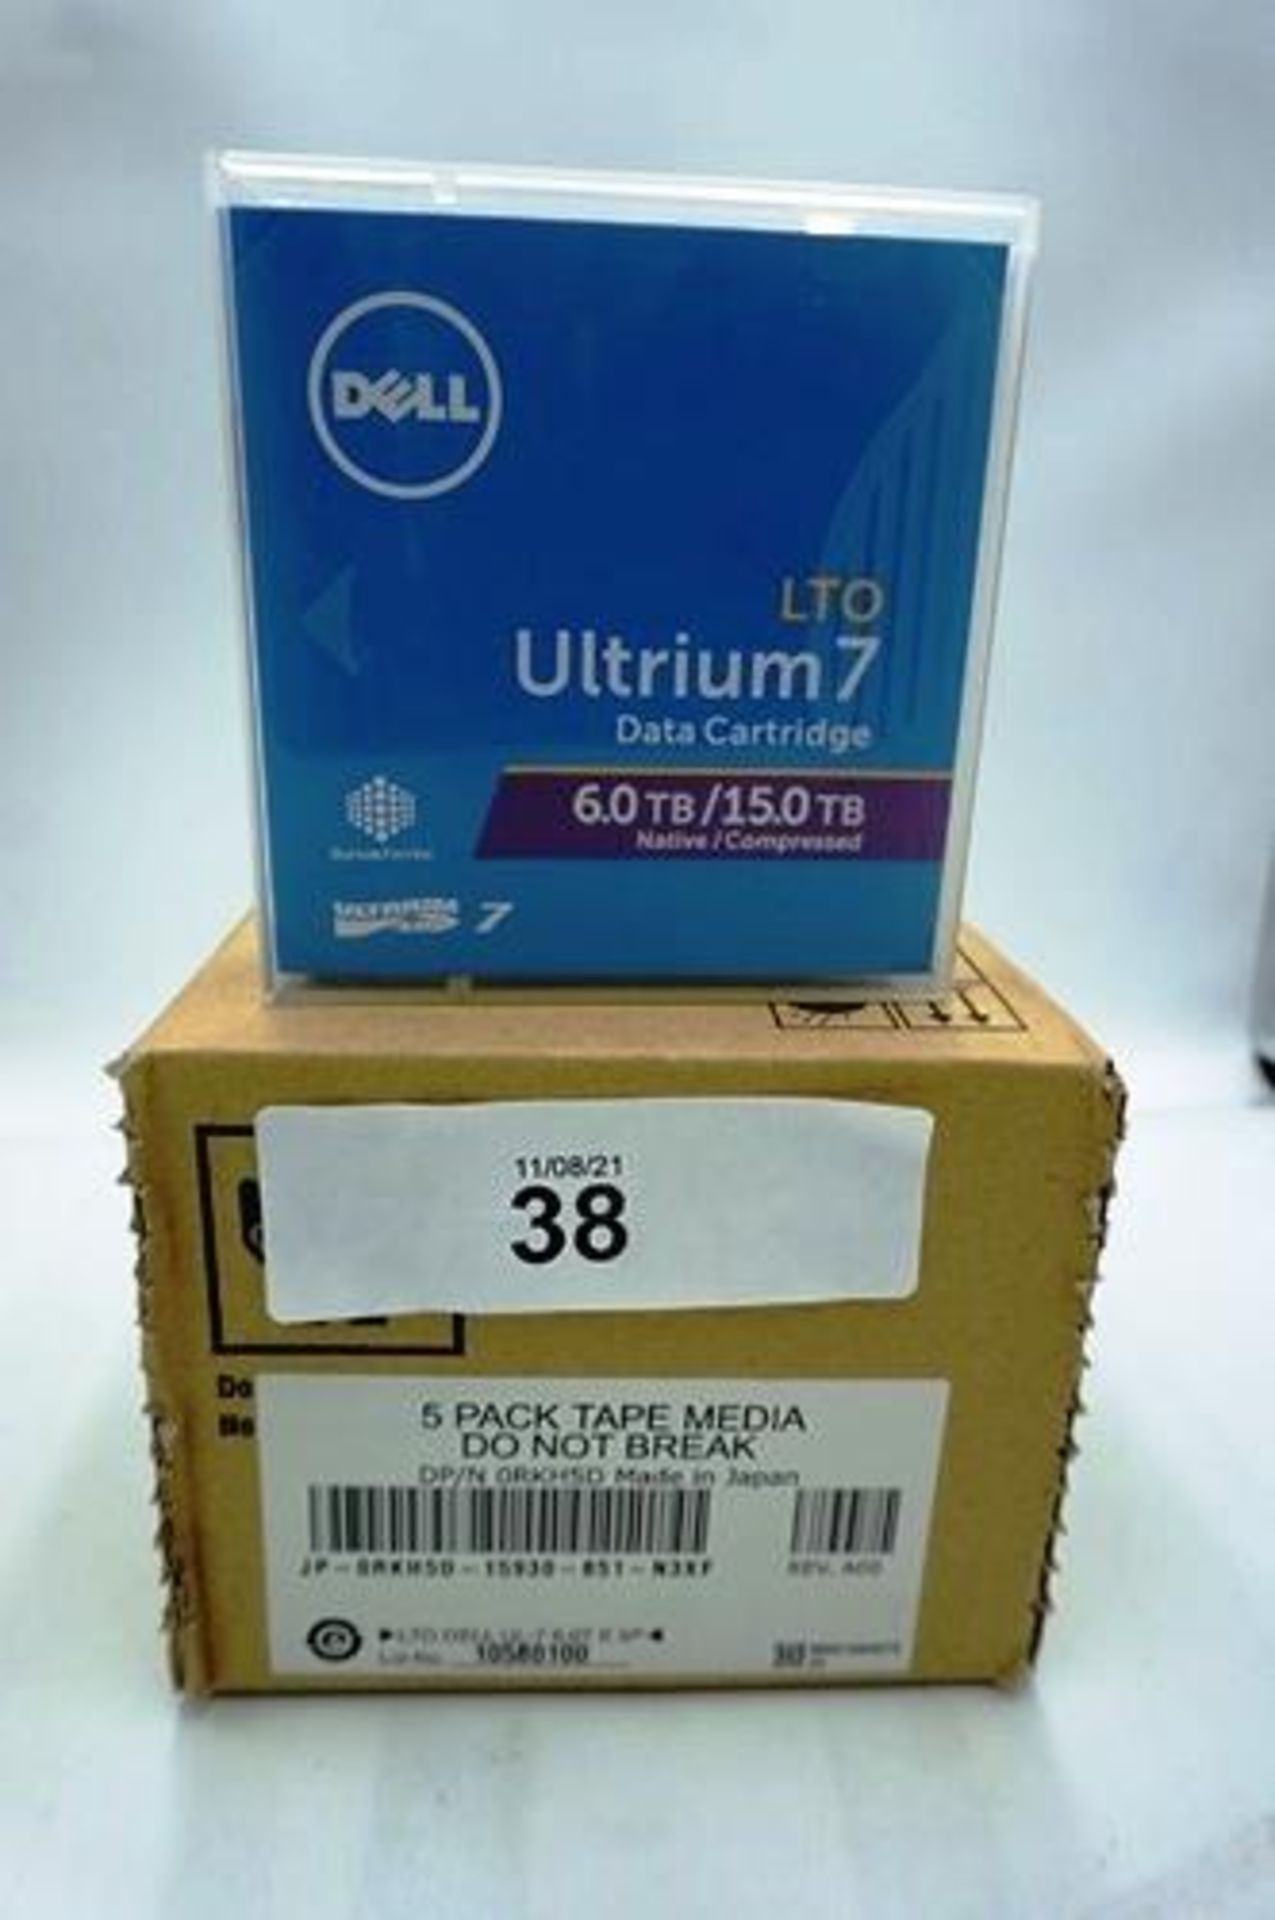 6 x Dell Ultrium 7 LTO data cartridges, 6.0/15.0TB, model 07J4HF - Sealed new in box (C1)